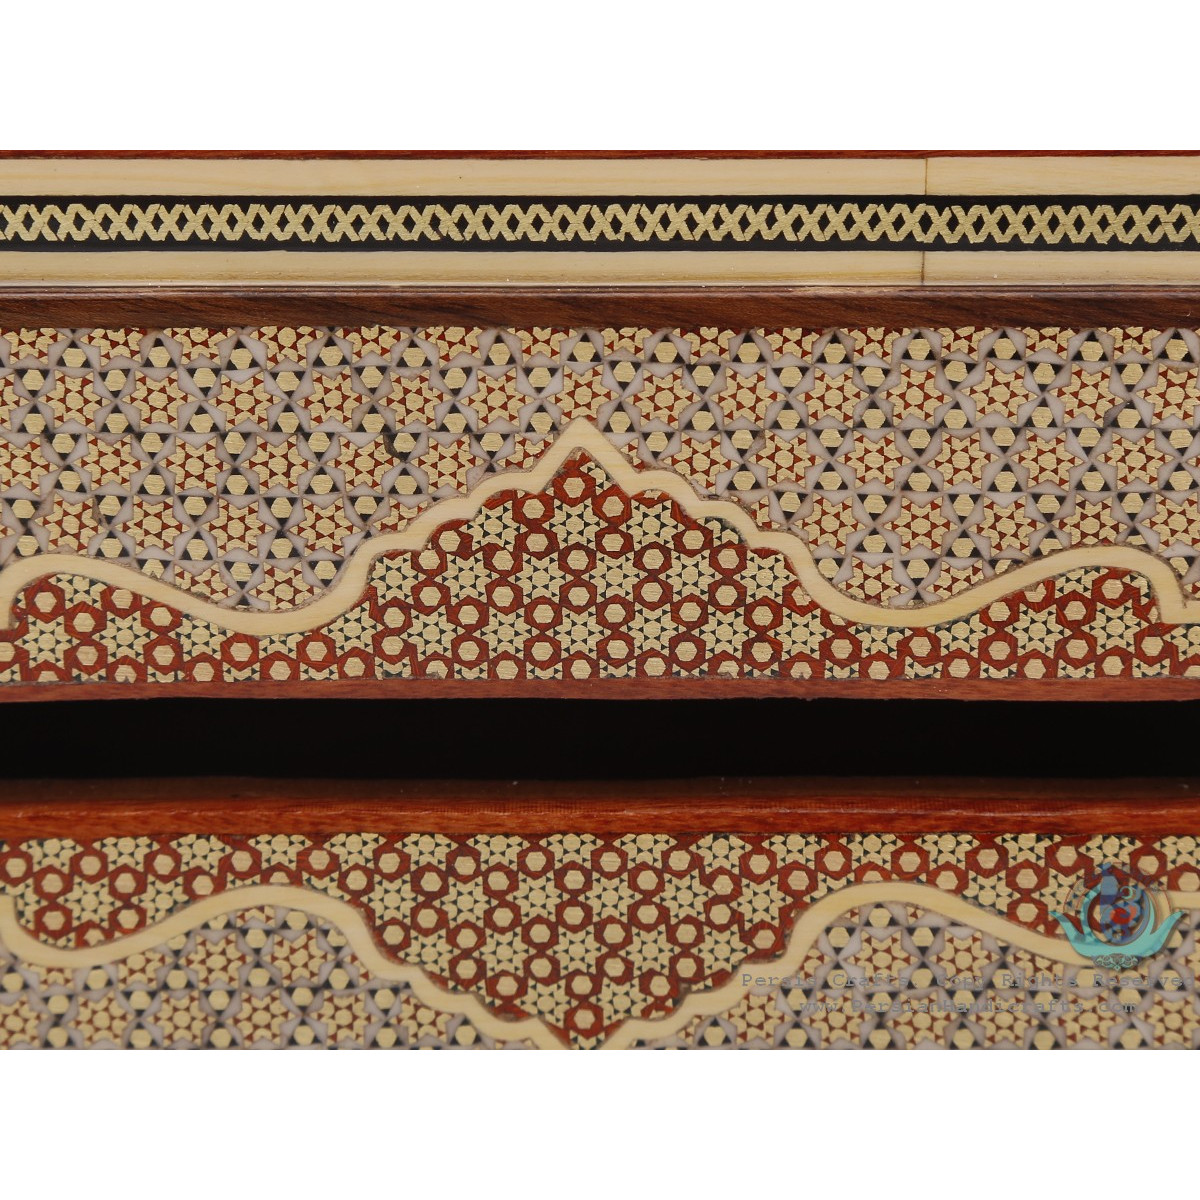 Privileged Custom Design Khatam Marquetry Tissue Box -	HKH3901-Persian Handicrafts